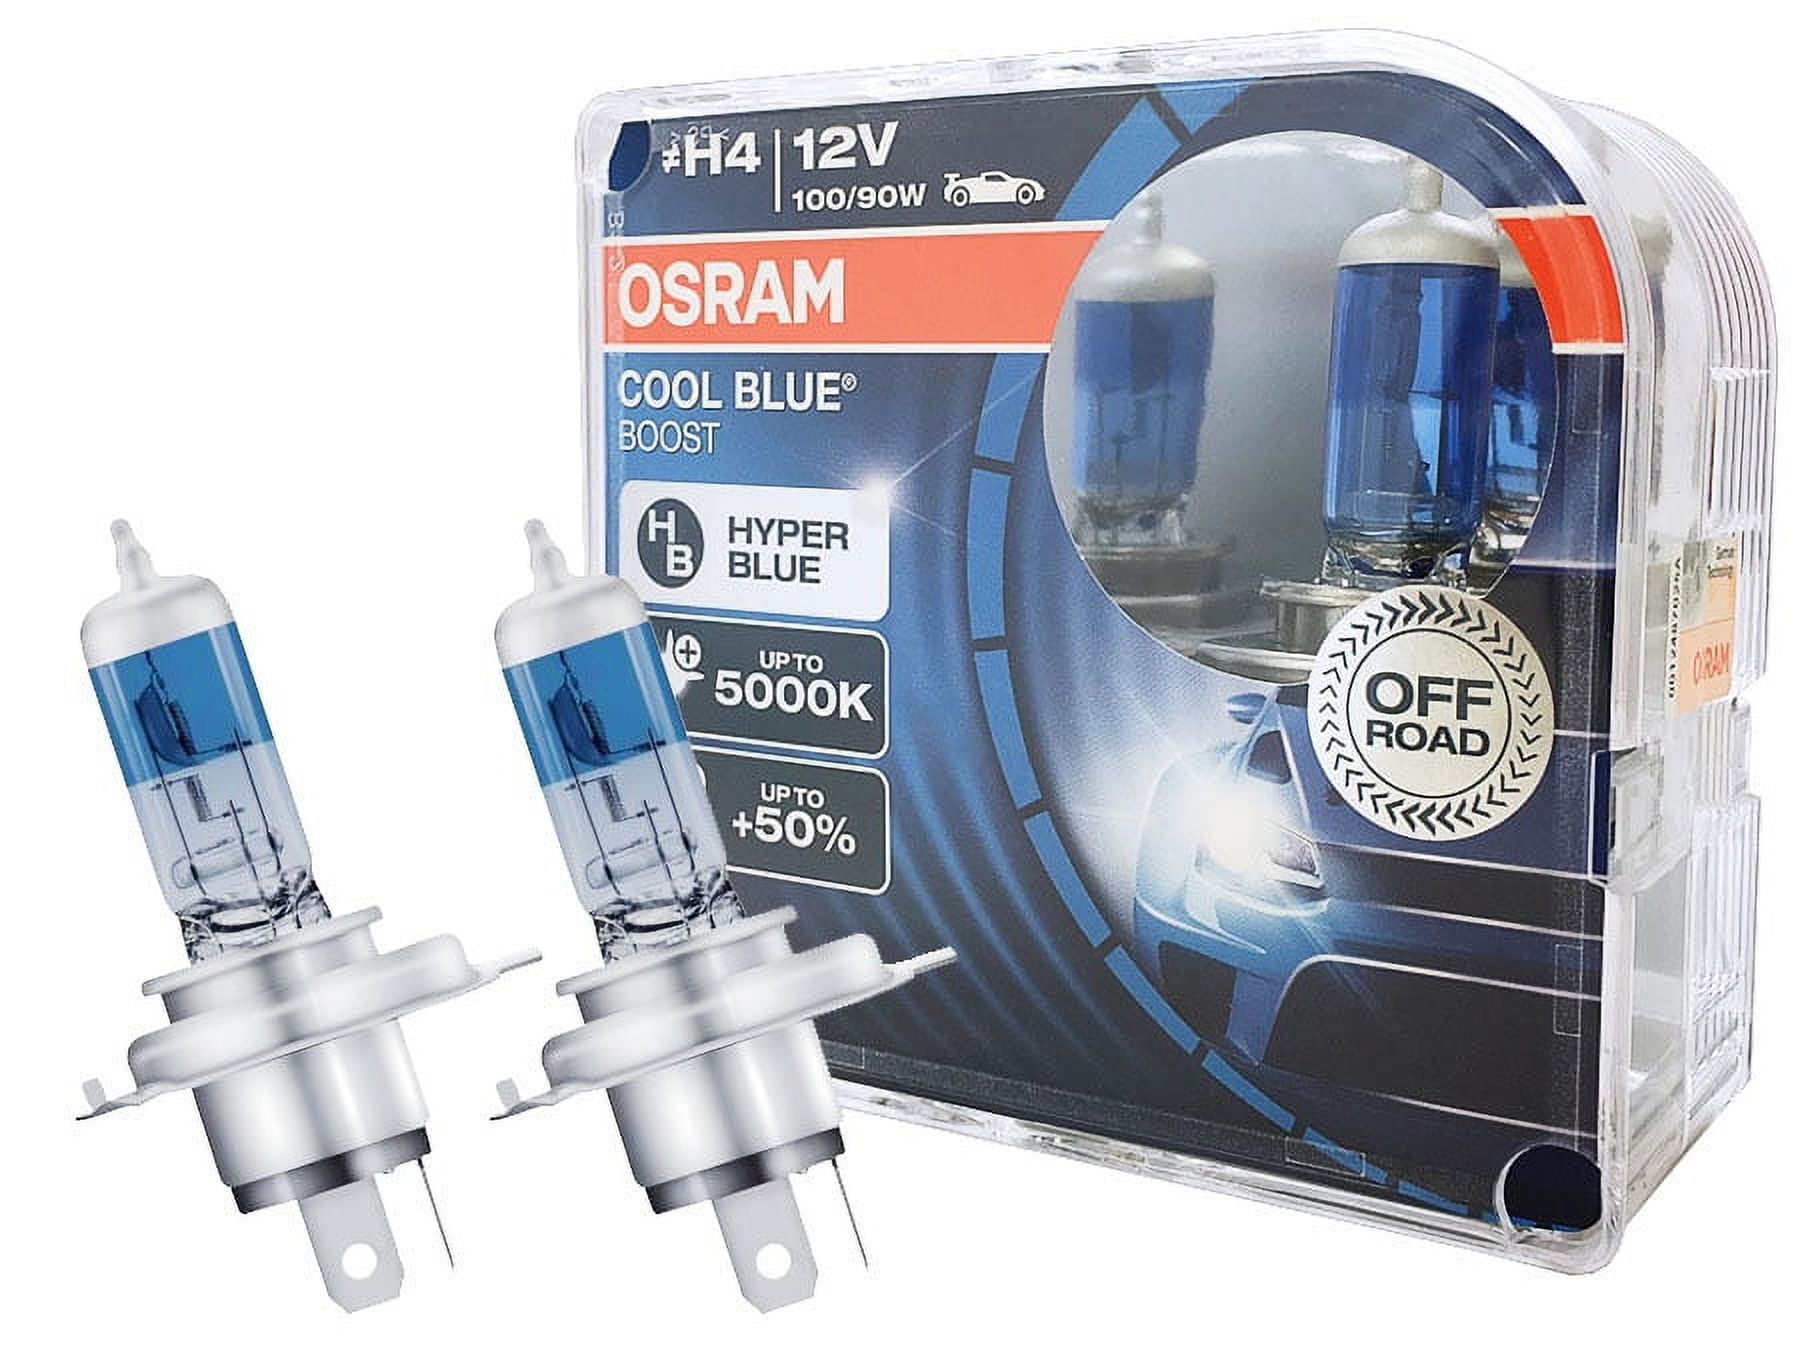  Osram H4 9003 Night Breaker LED High Beam and Low Beam Lamp  64193DWNB Replacement Headlight LED Bulbs 12V 27/23W